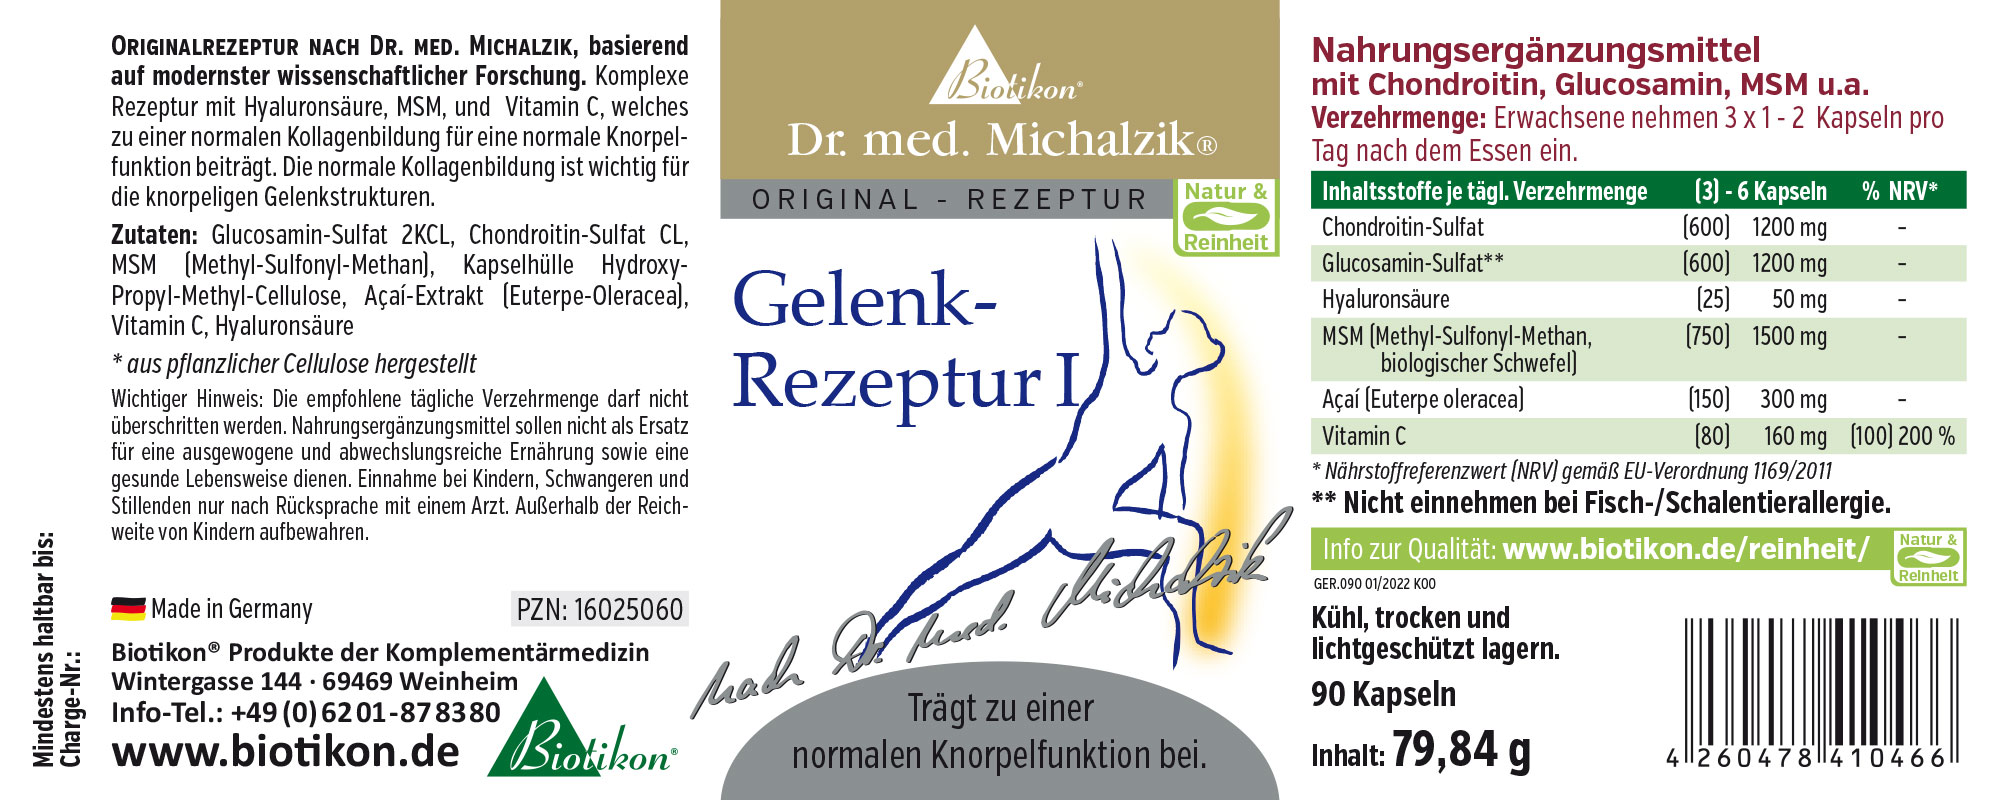 Gelenk-Rezeptur I nach Dr. med. Michalzik